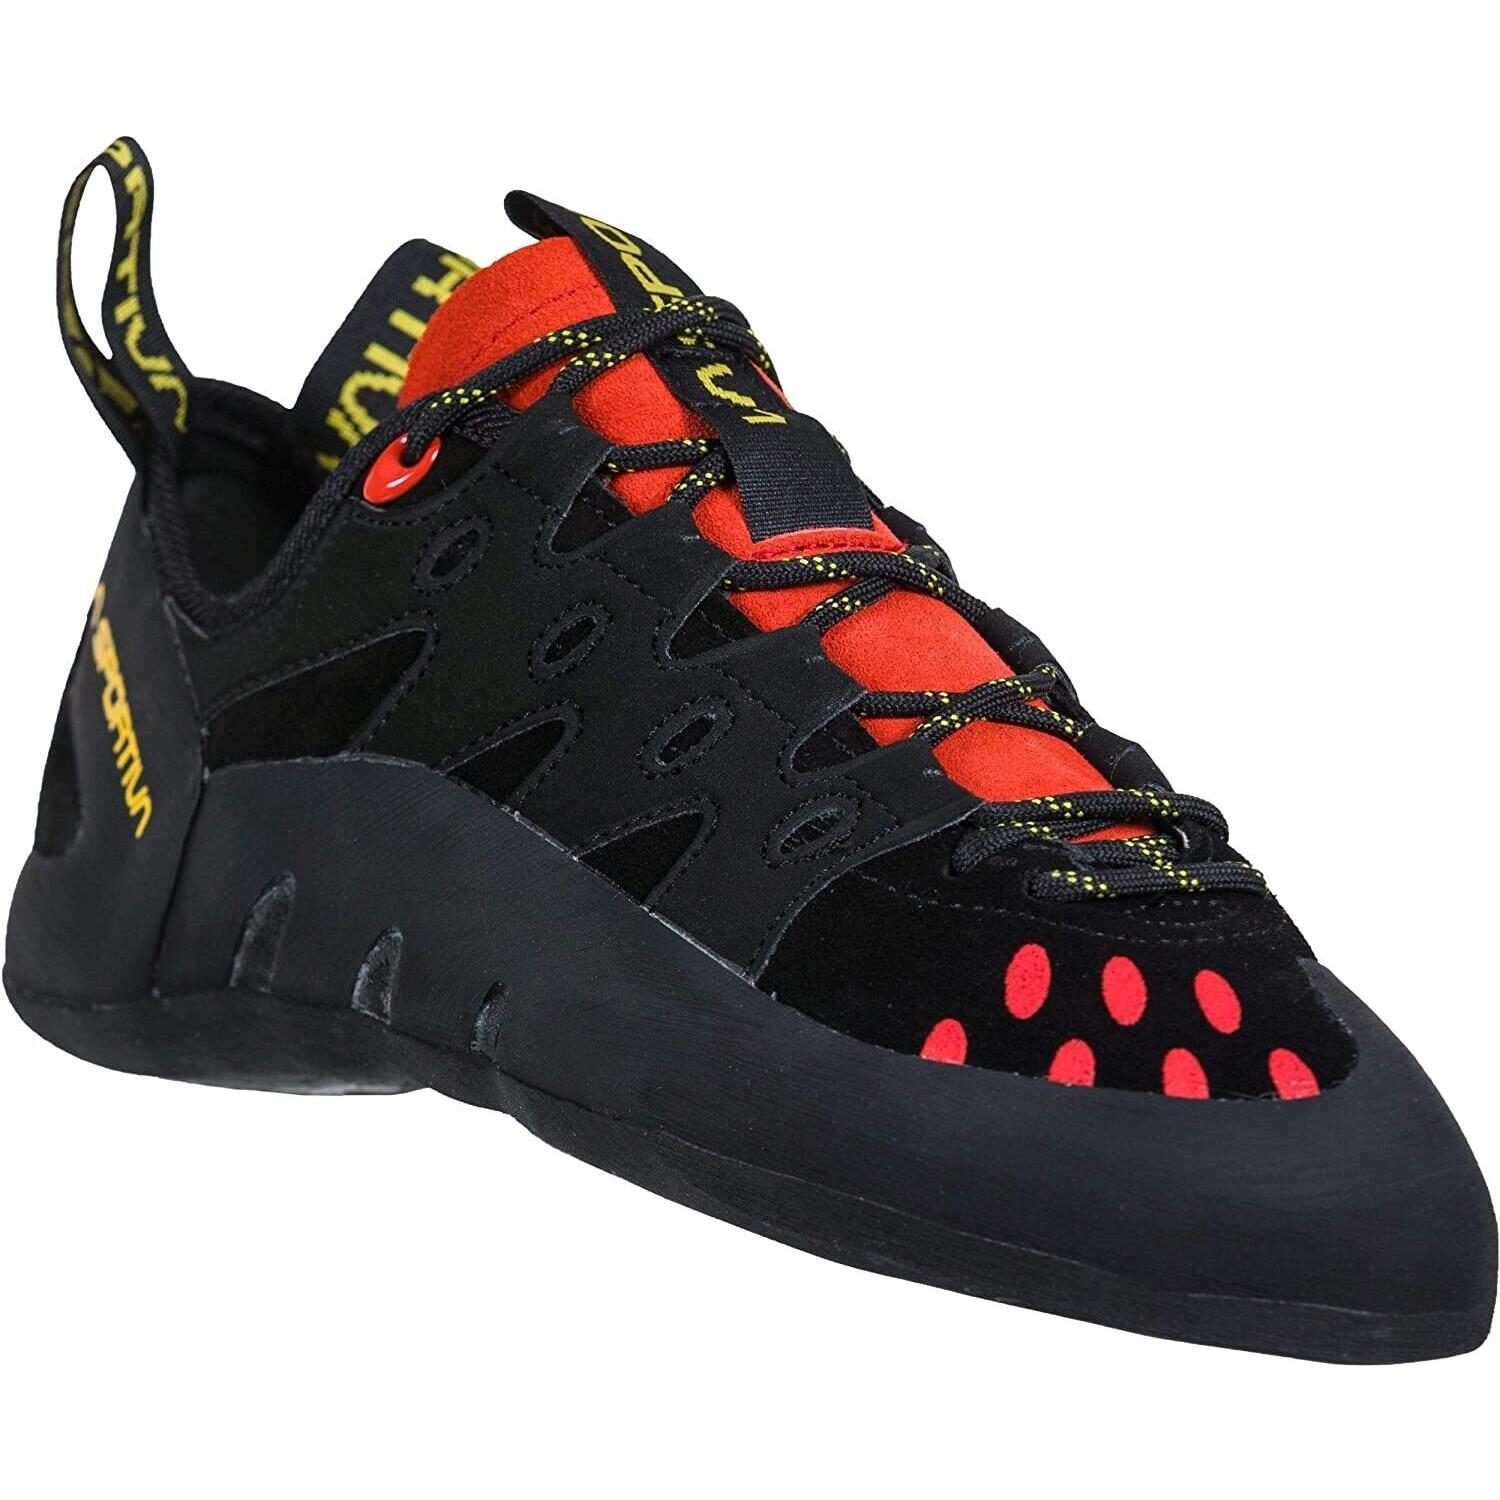 Lasportiva La Sportiva 258071 Mens Lace Performance Climbing Shoe Black/poppy Size 10 M